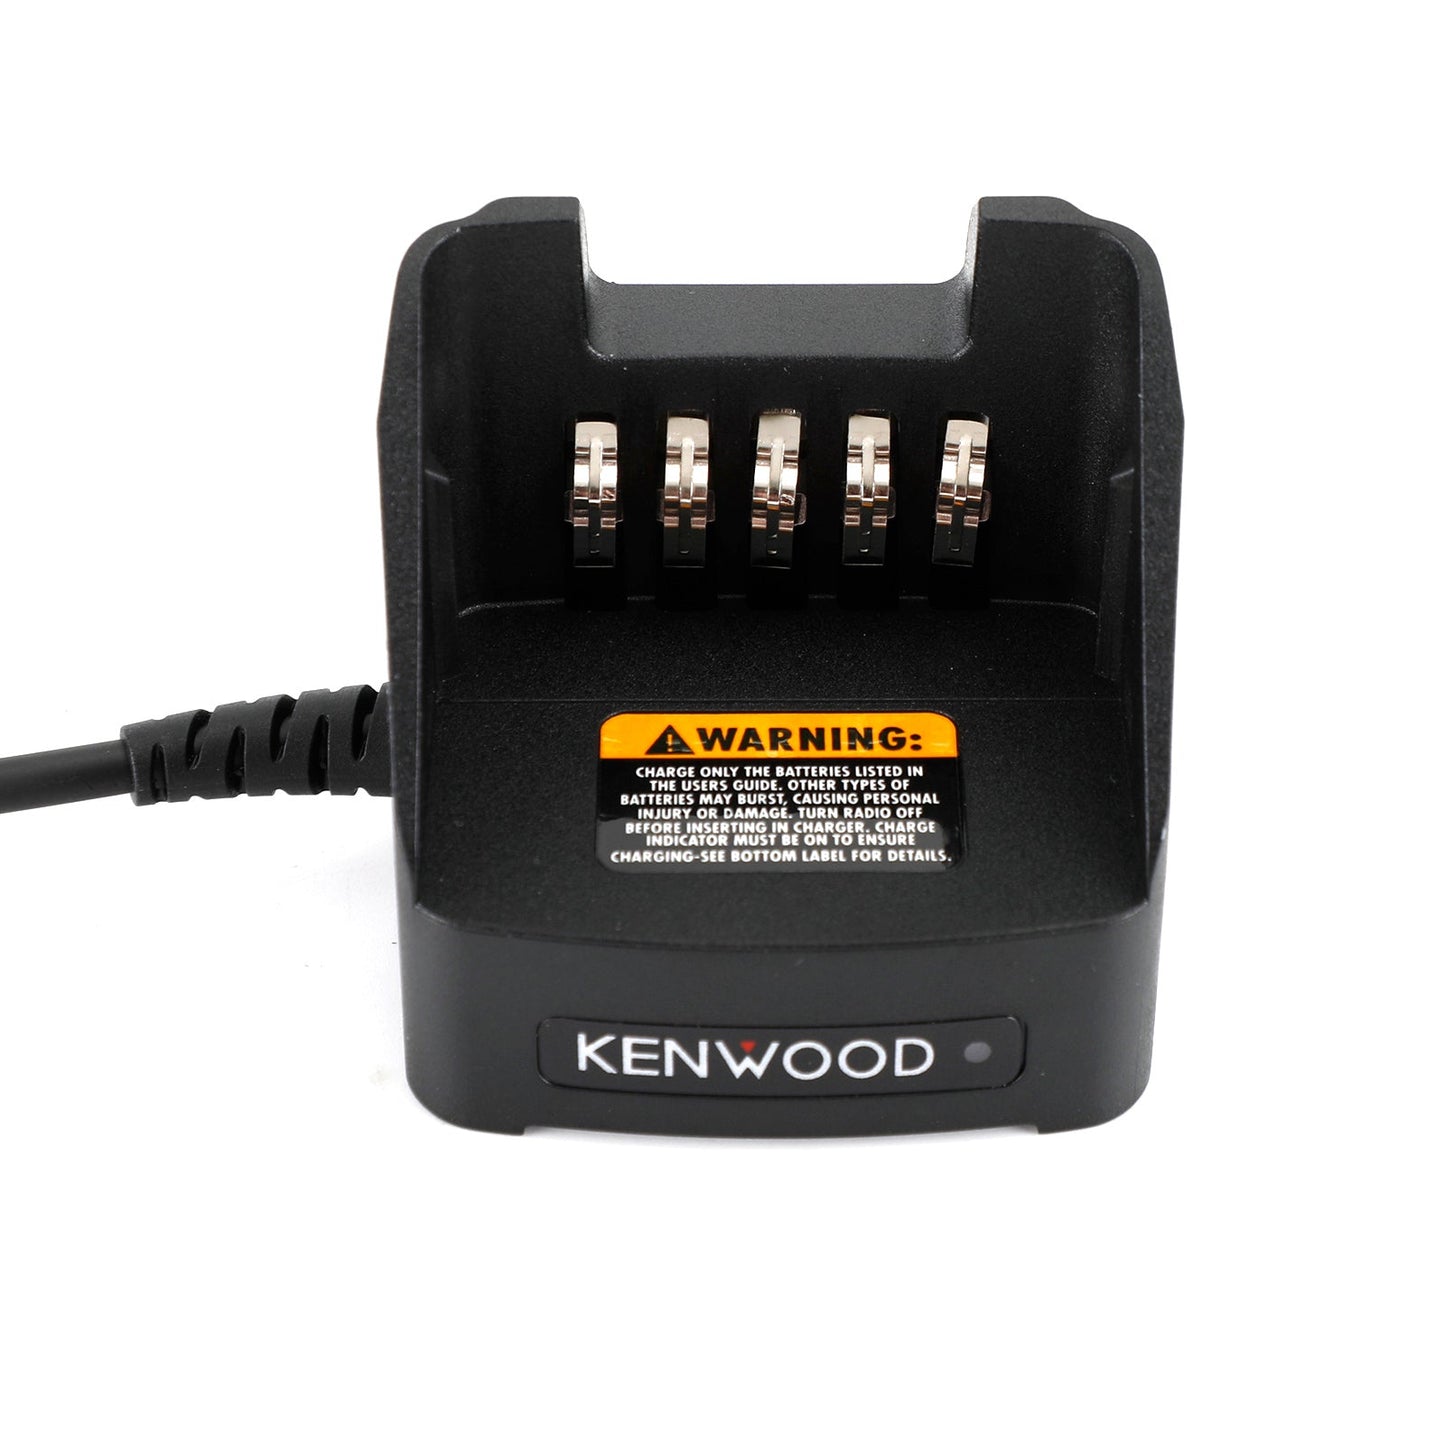 KVC-21 Car Battery Charger For Kenwood NX-200 NX-300 NX-5200 TK-2180 TK-3180